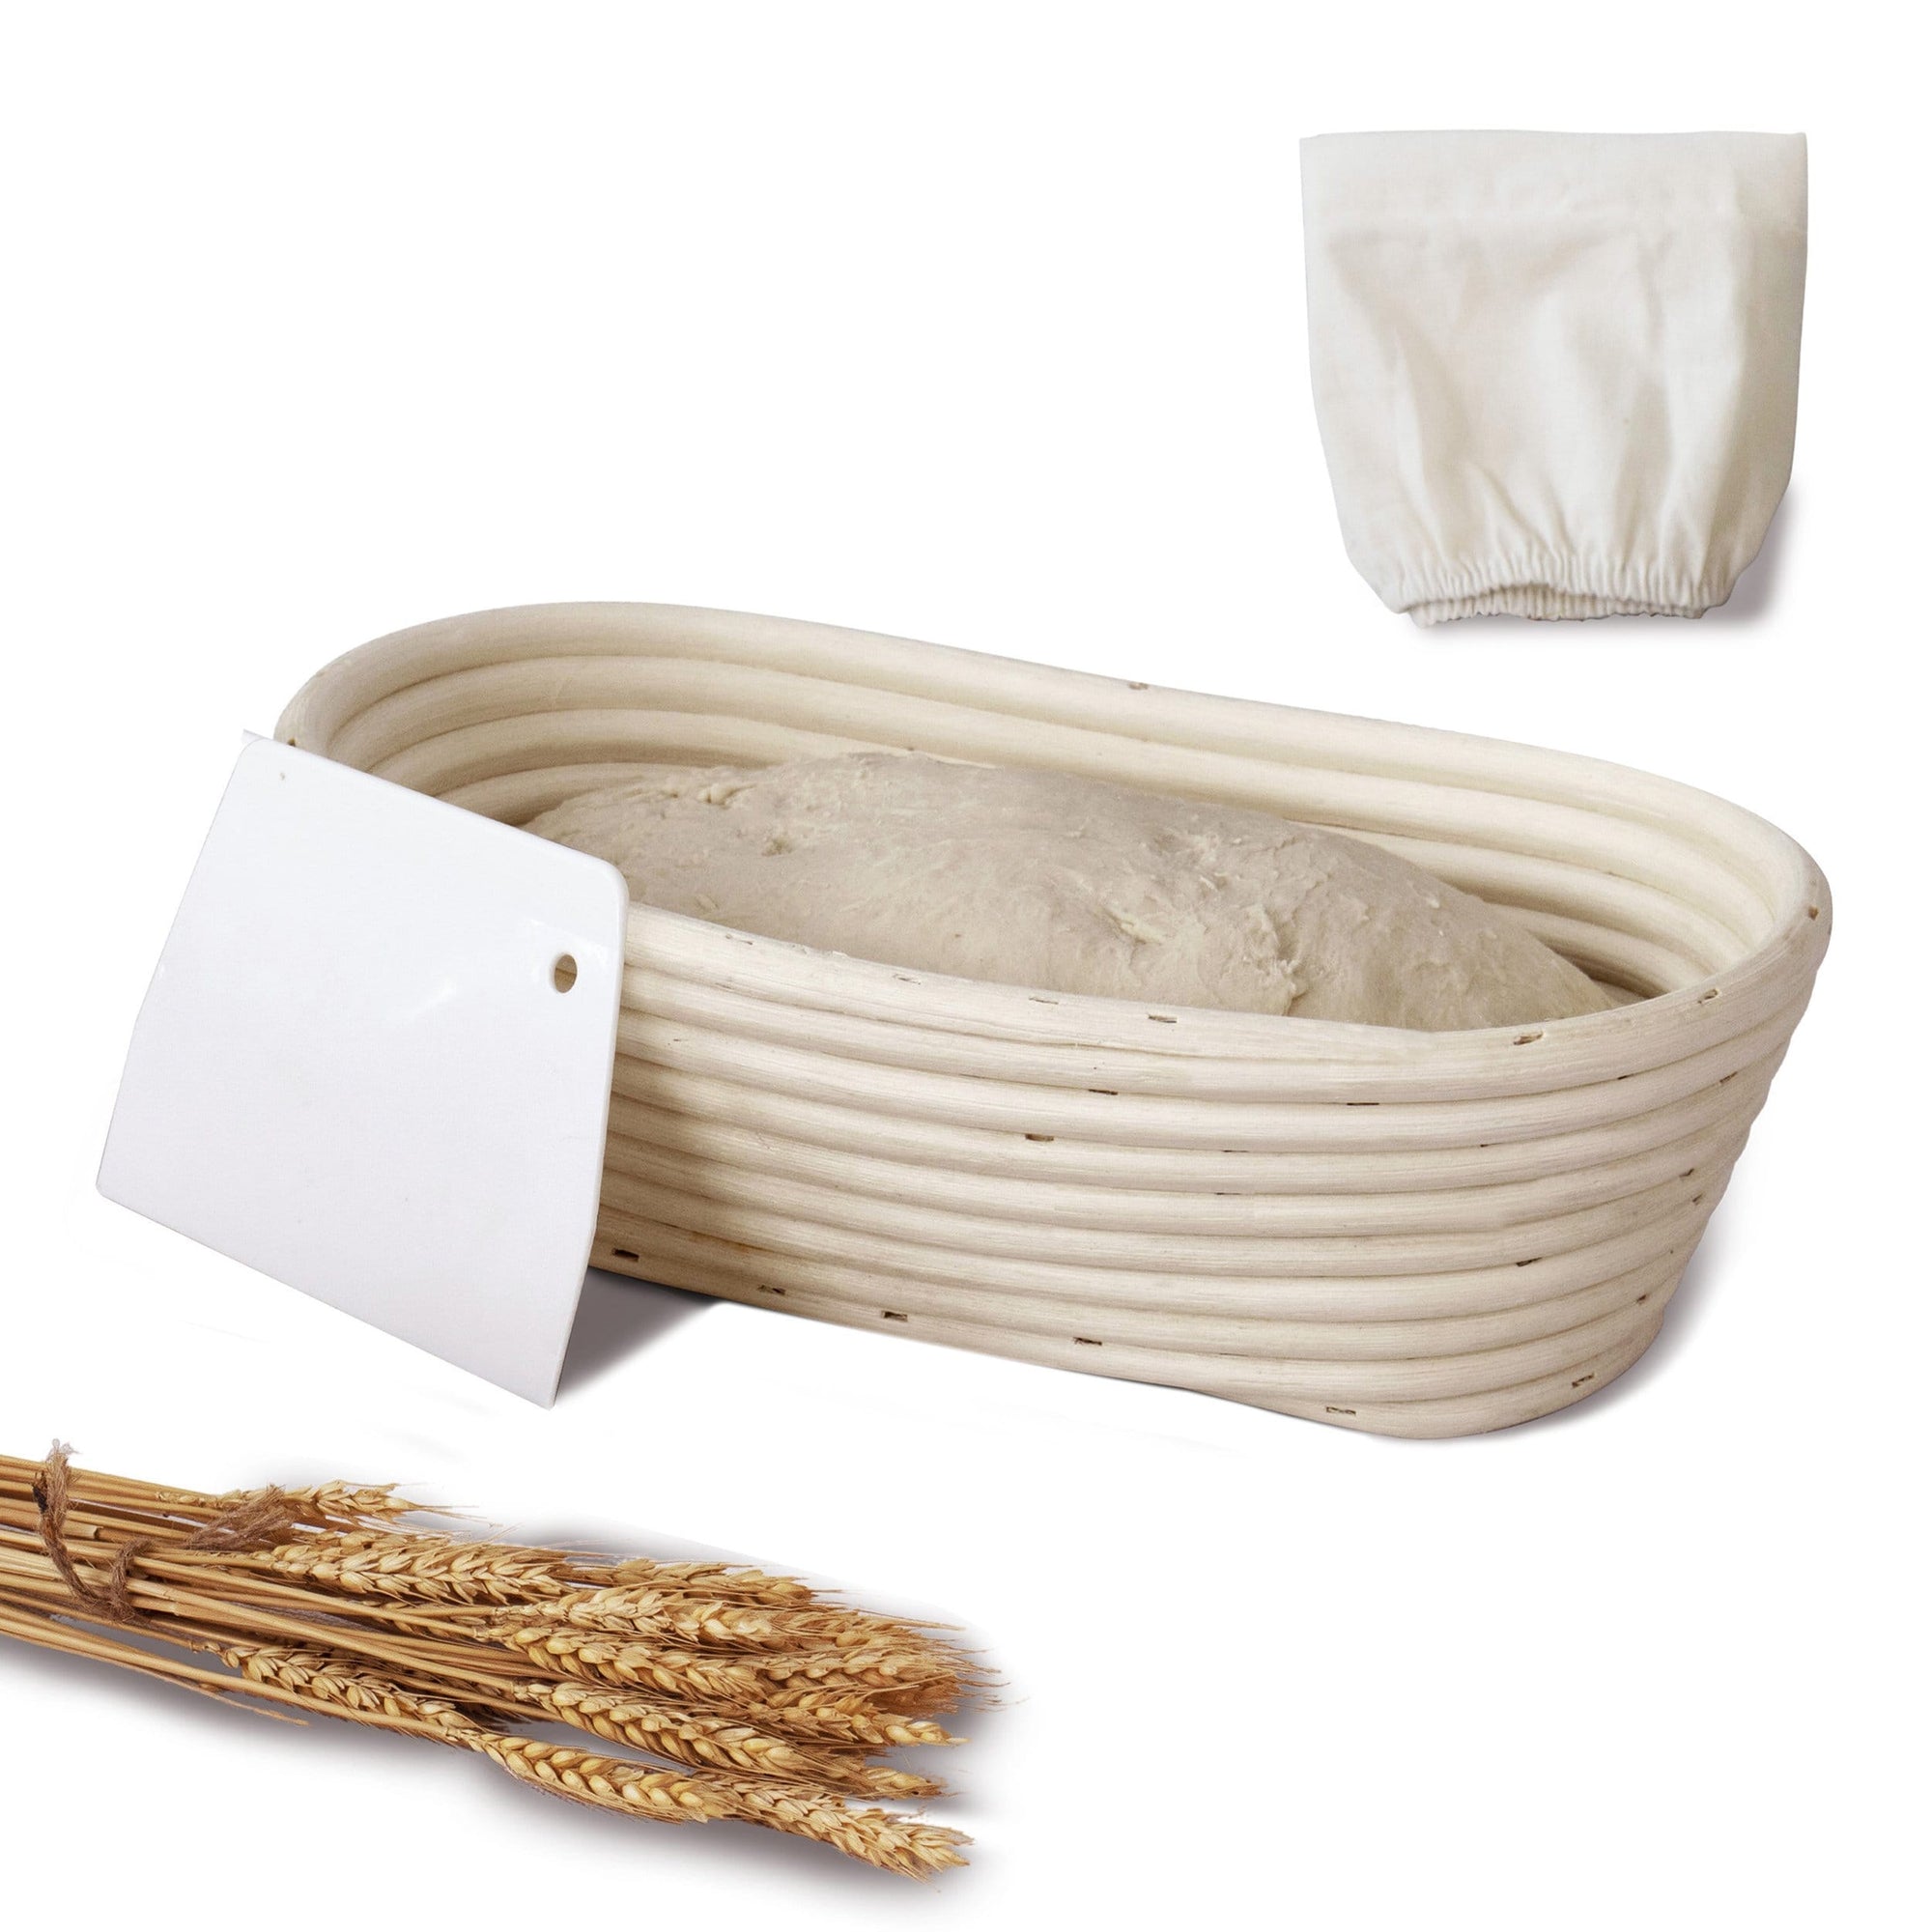 Oval Banneton Bread Proofing Baskets - 10"